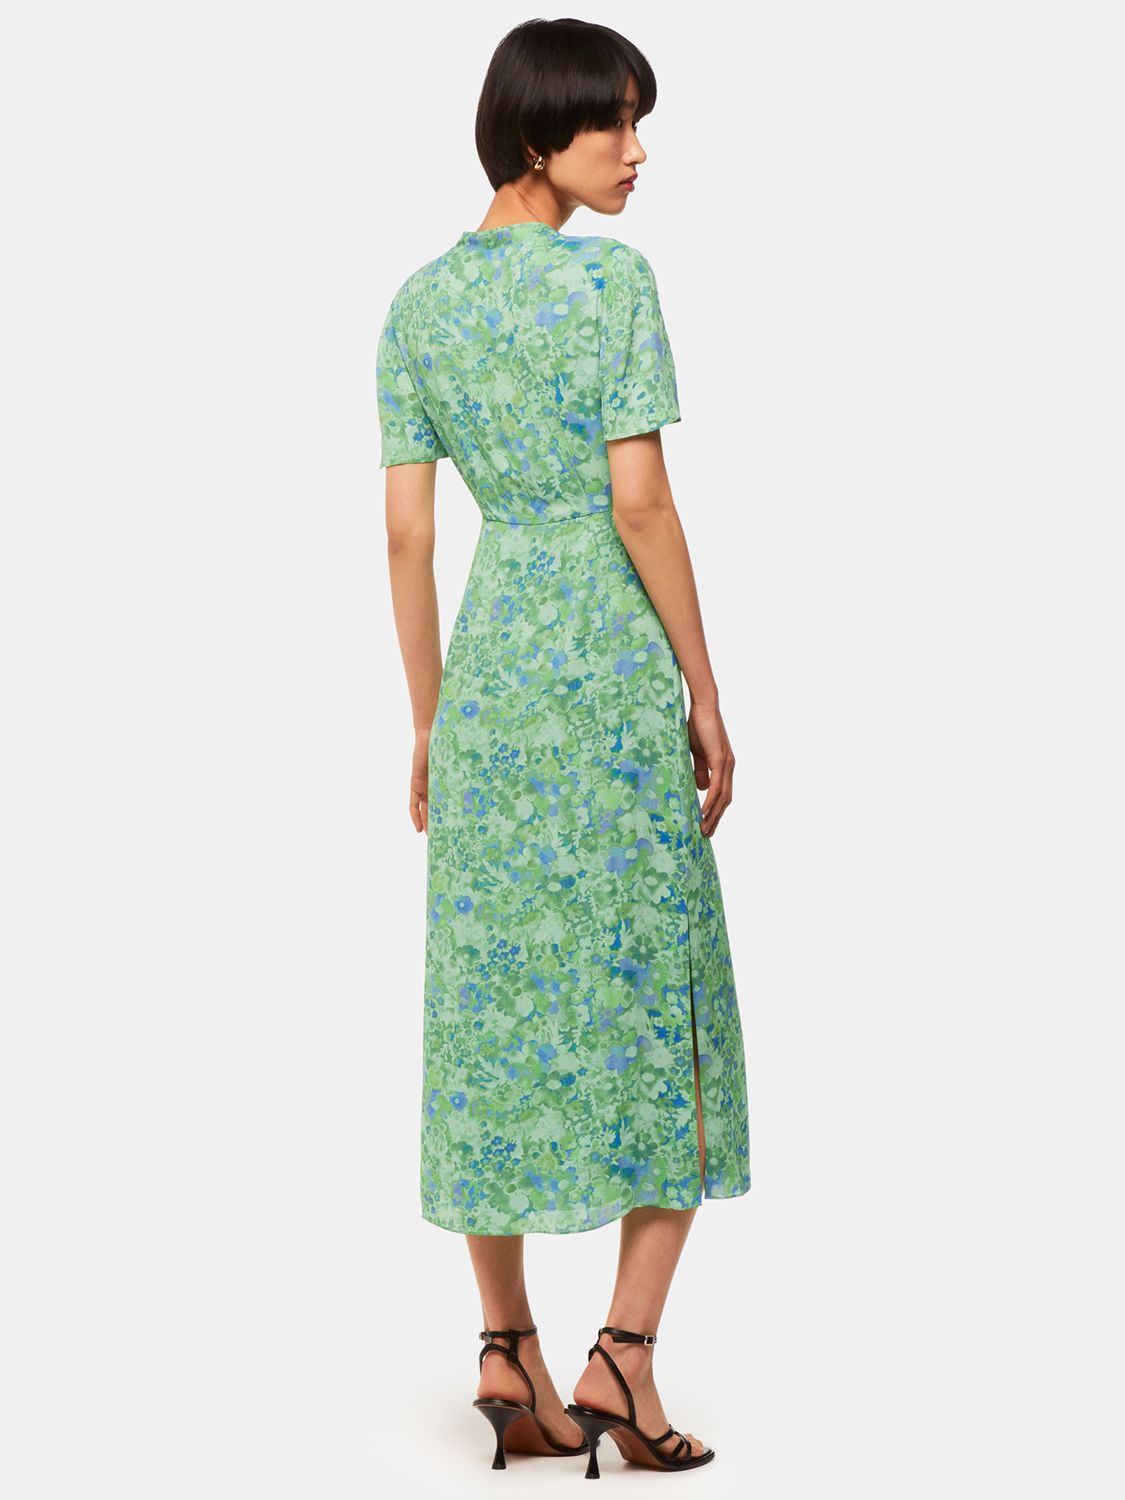 Whistles Lucid Floral Bonnie Dress, Green/Multi, 6